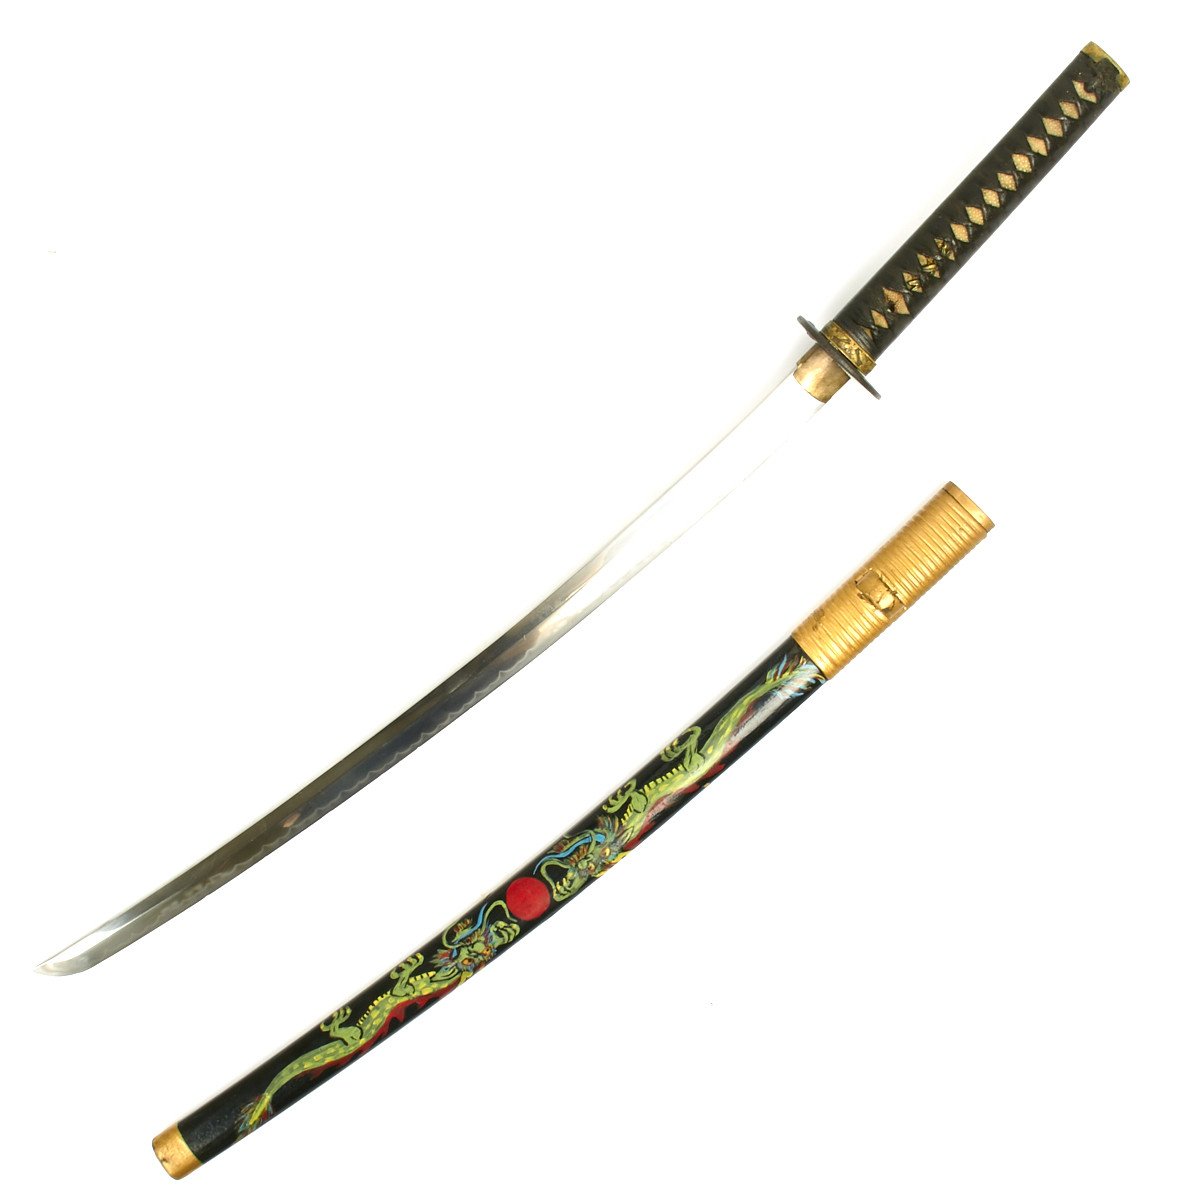 Vintage China Made Japanese Japan Souvenir Decorative Katana Sword w/ –  ANTIQUE & MILITARY FROM BLACKSWAN